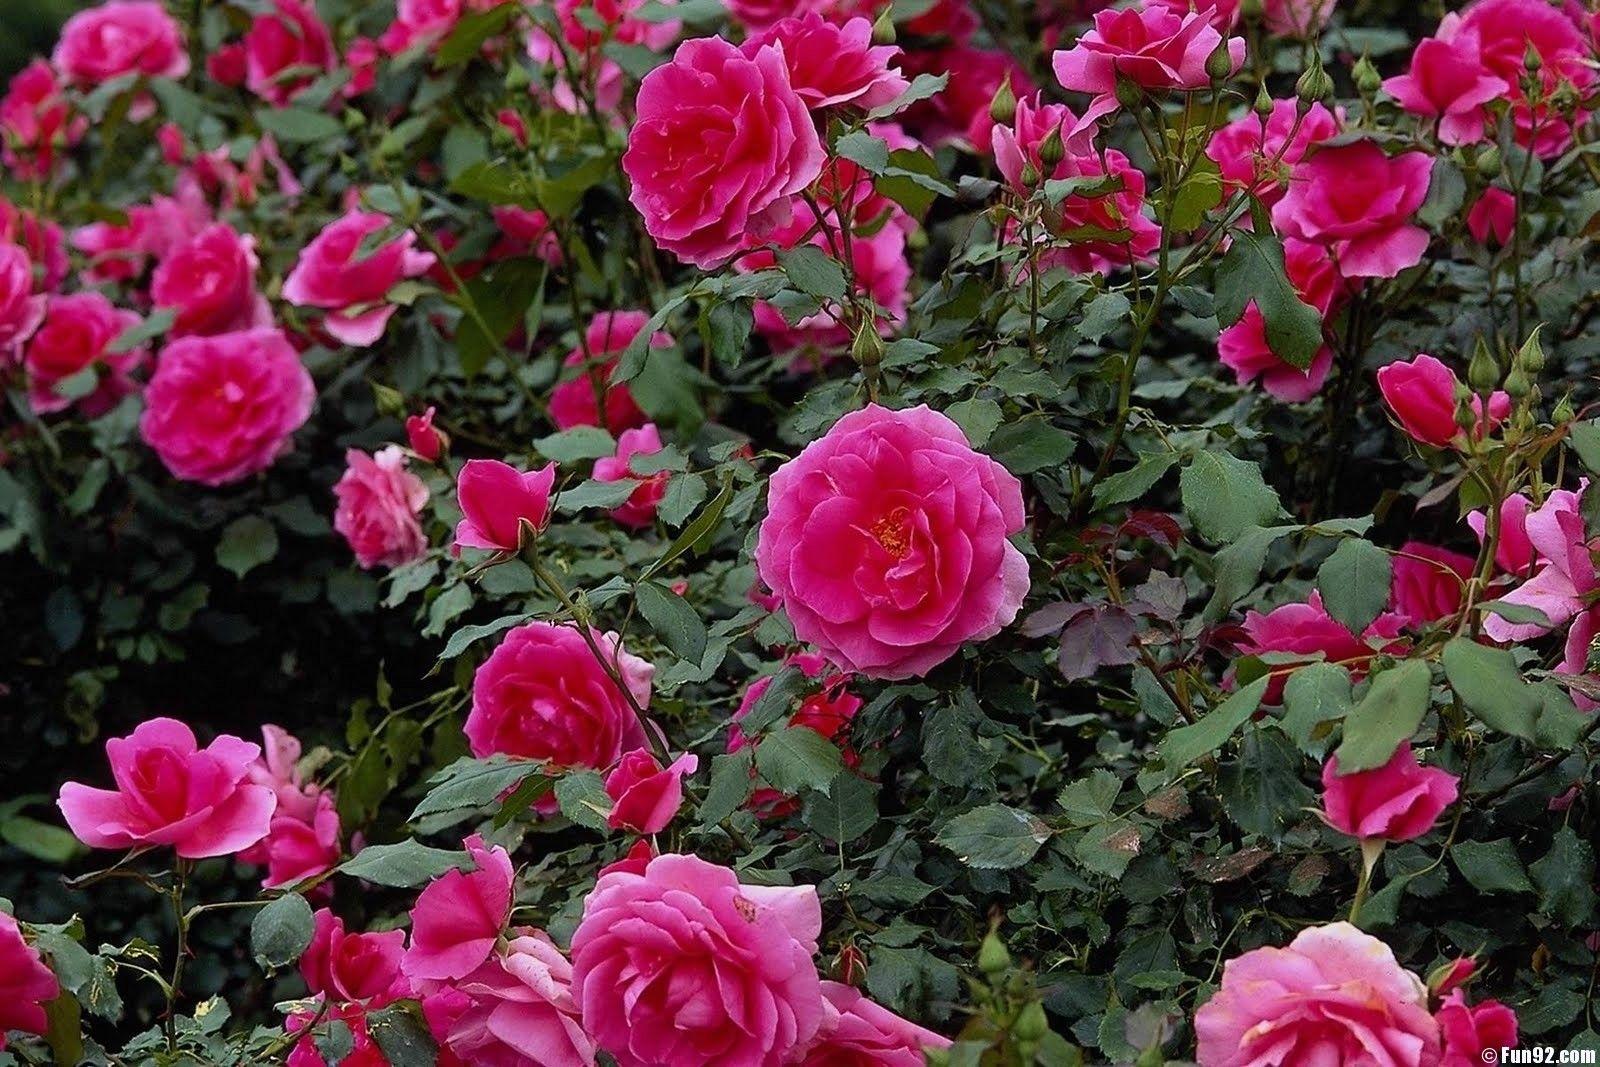 cliserpudo: Beautiful Rose Garden Wallpaper Image